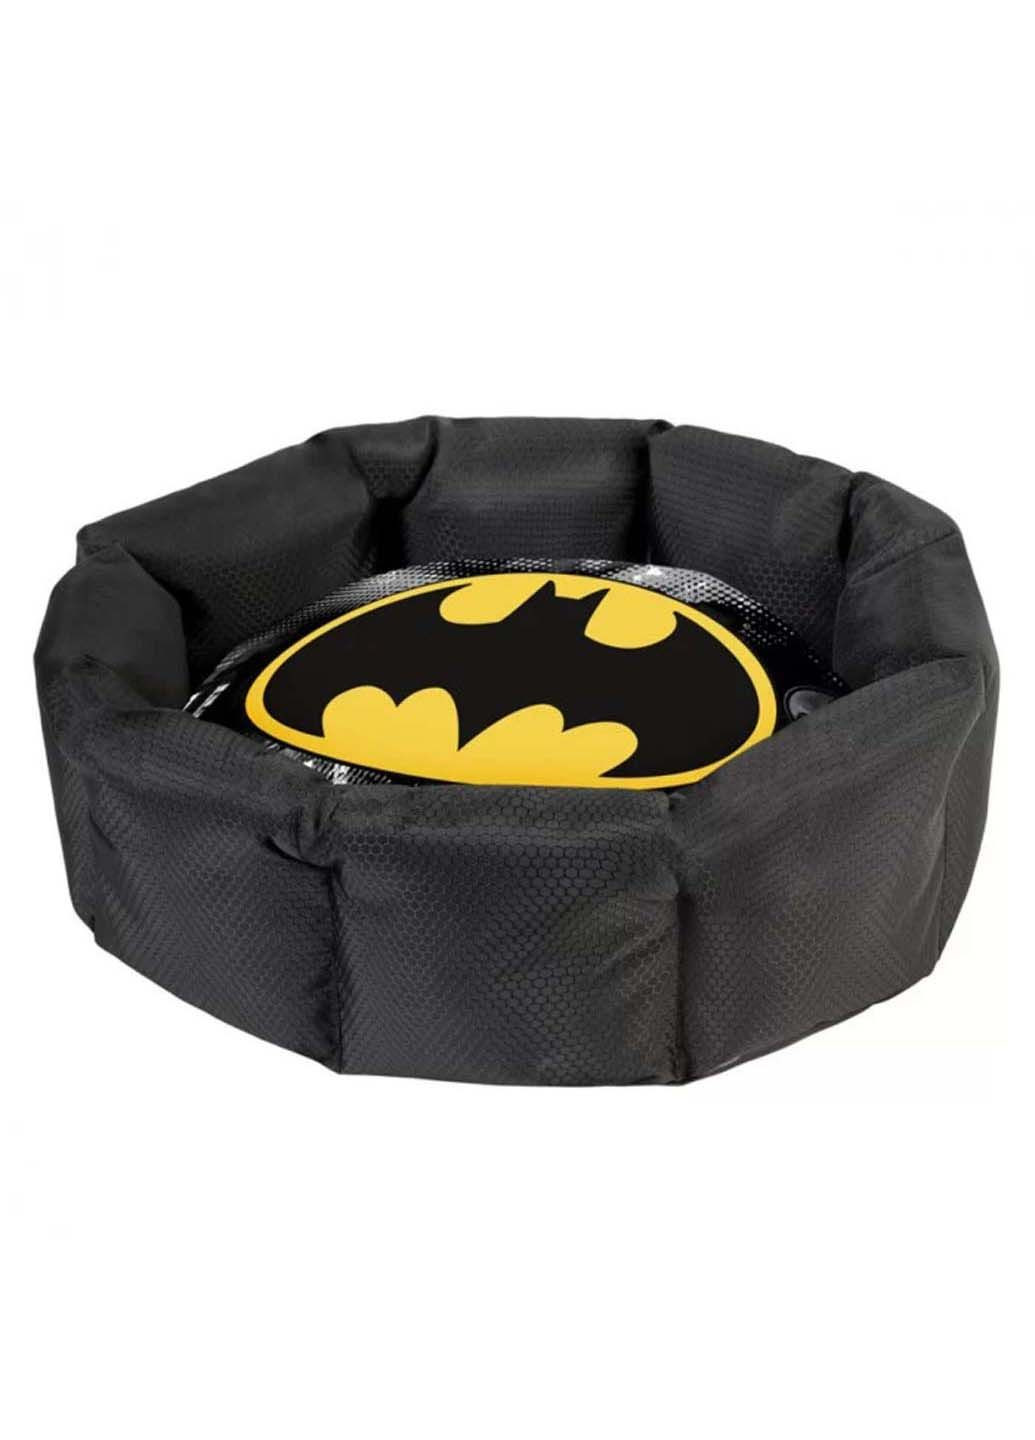 Лежанка для собак со сменной подушкой Relax Бэтмен 2 M 2 х 52 х 19 см WAUDOG (283608575)